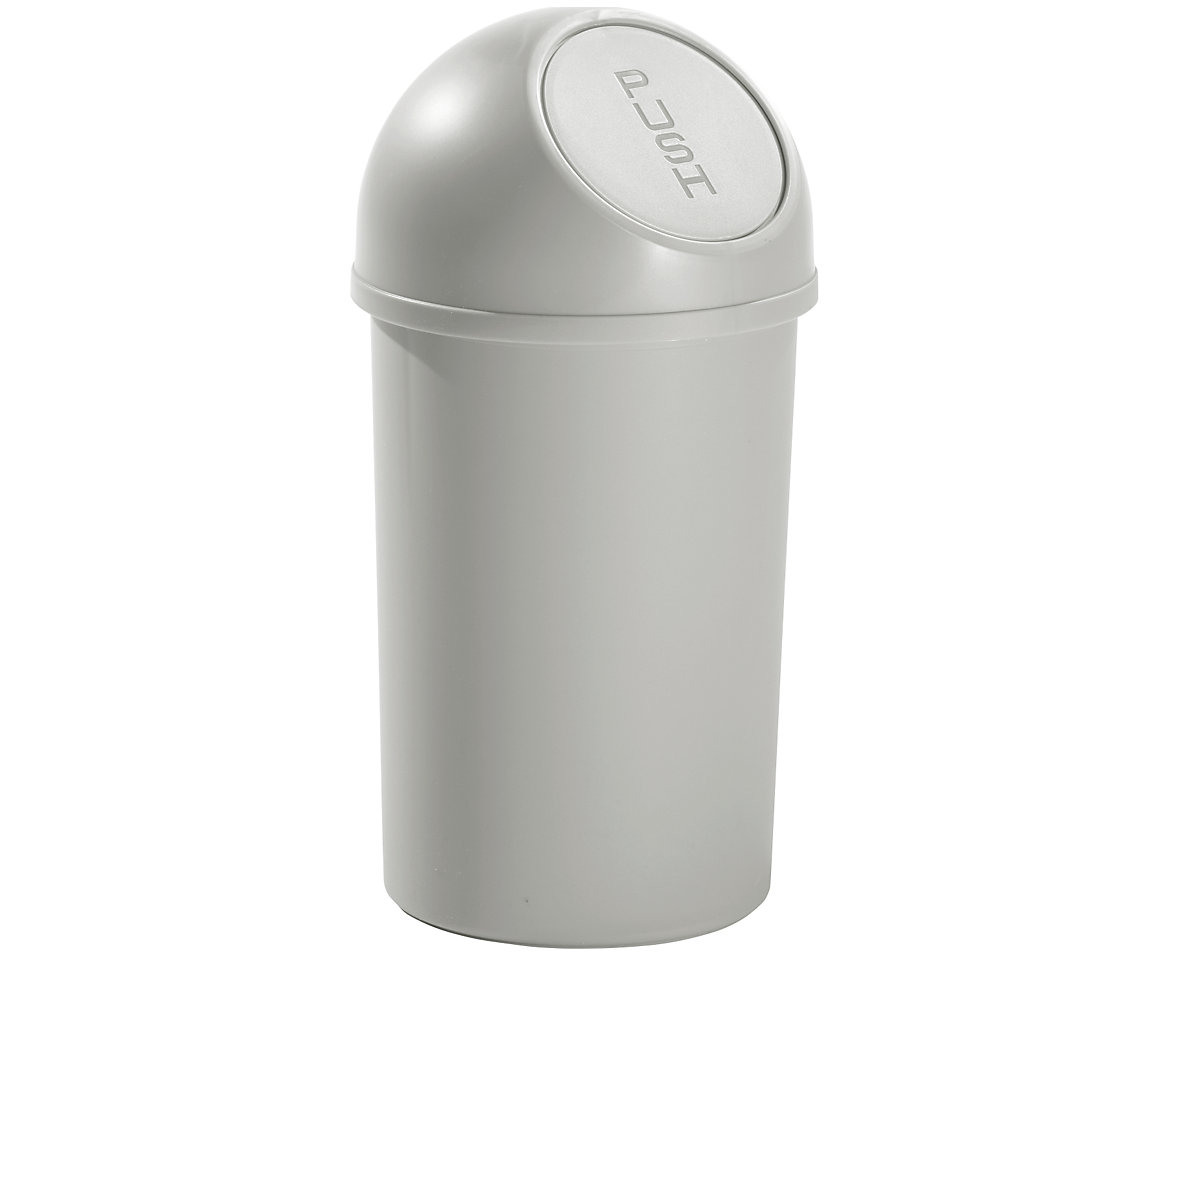 Push top waste bin made of plastic – helit